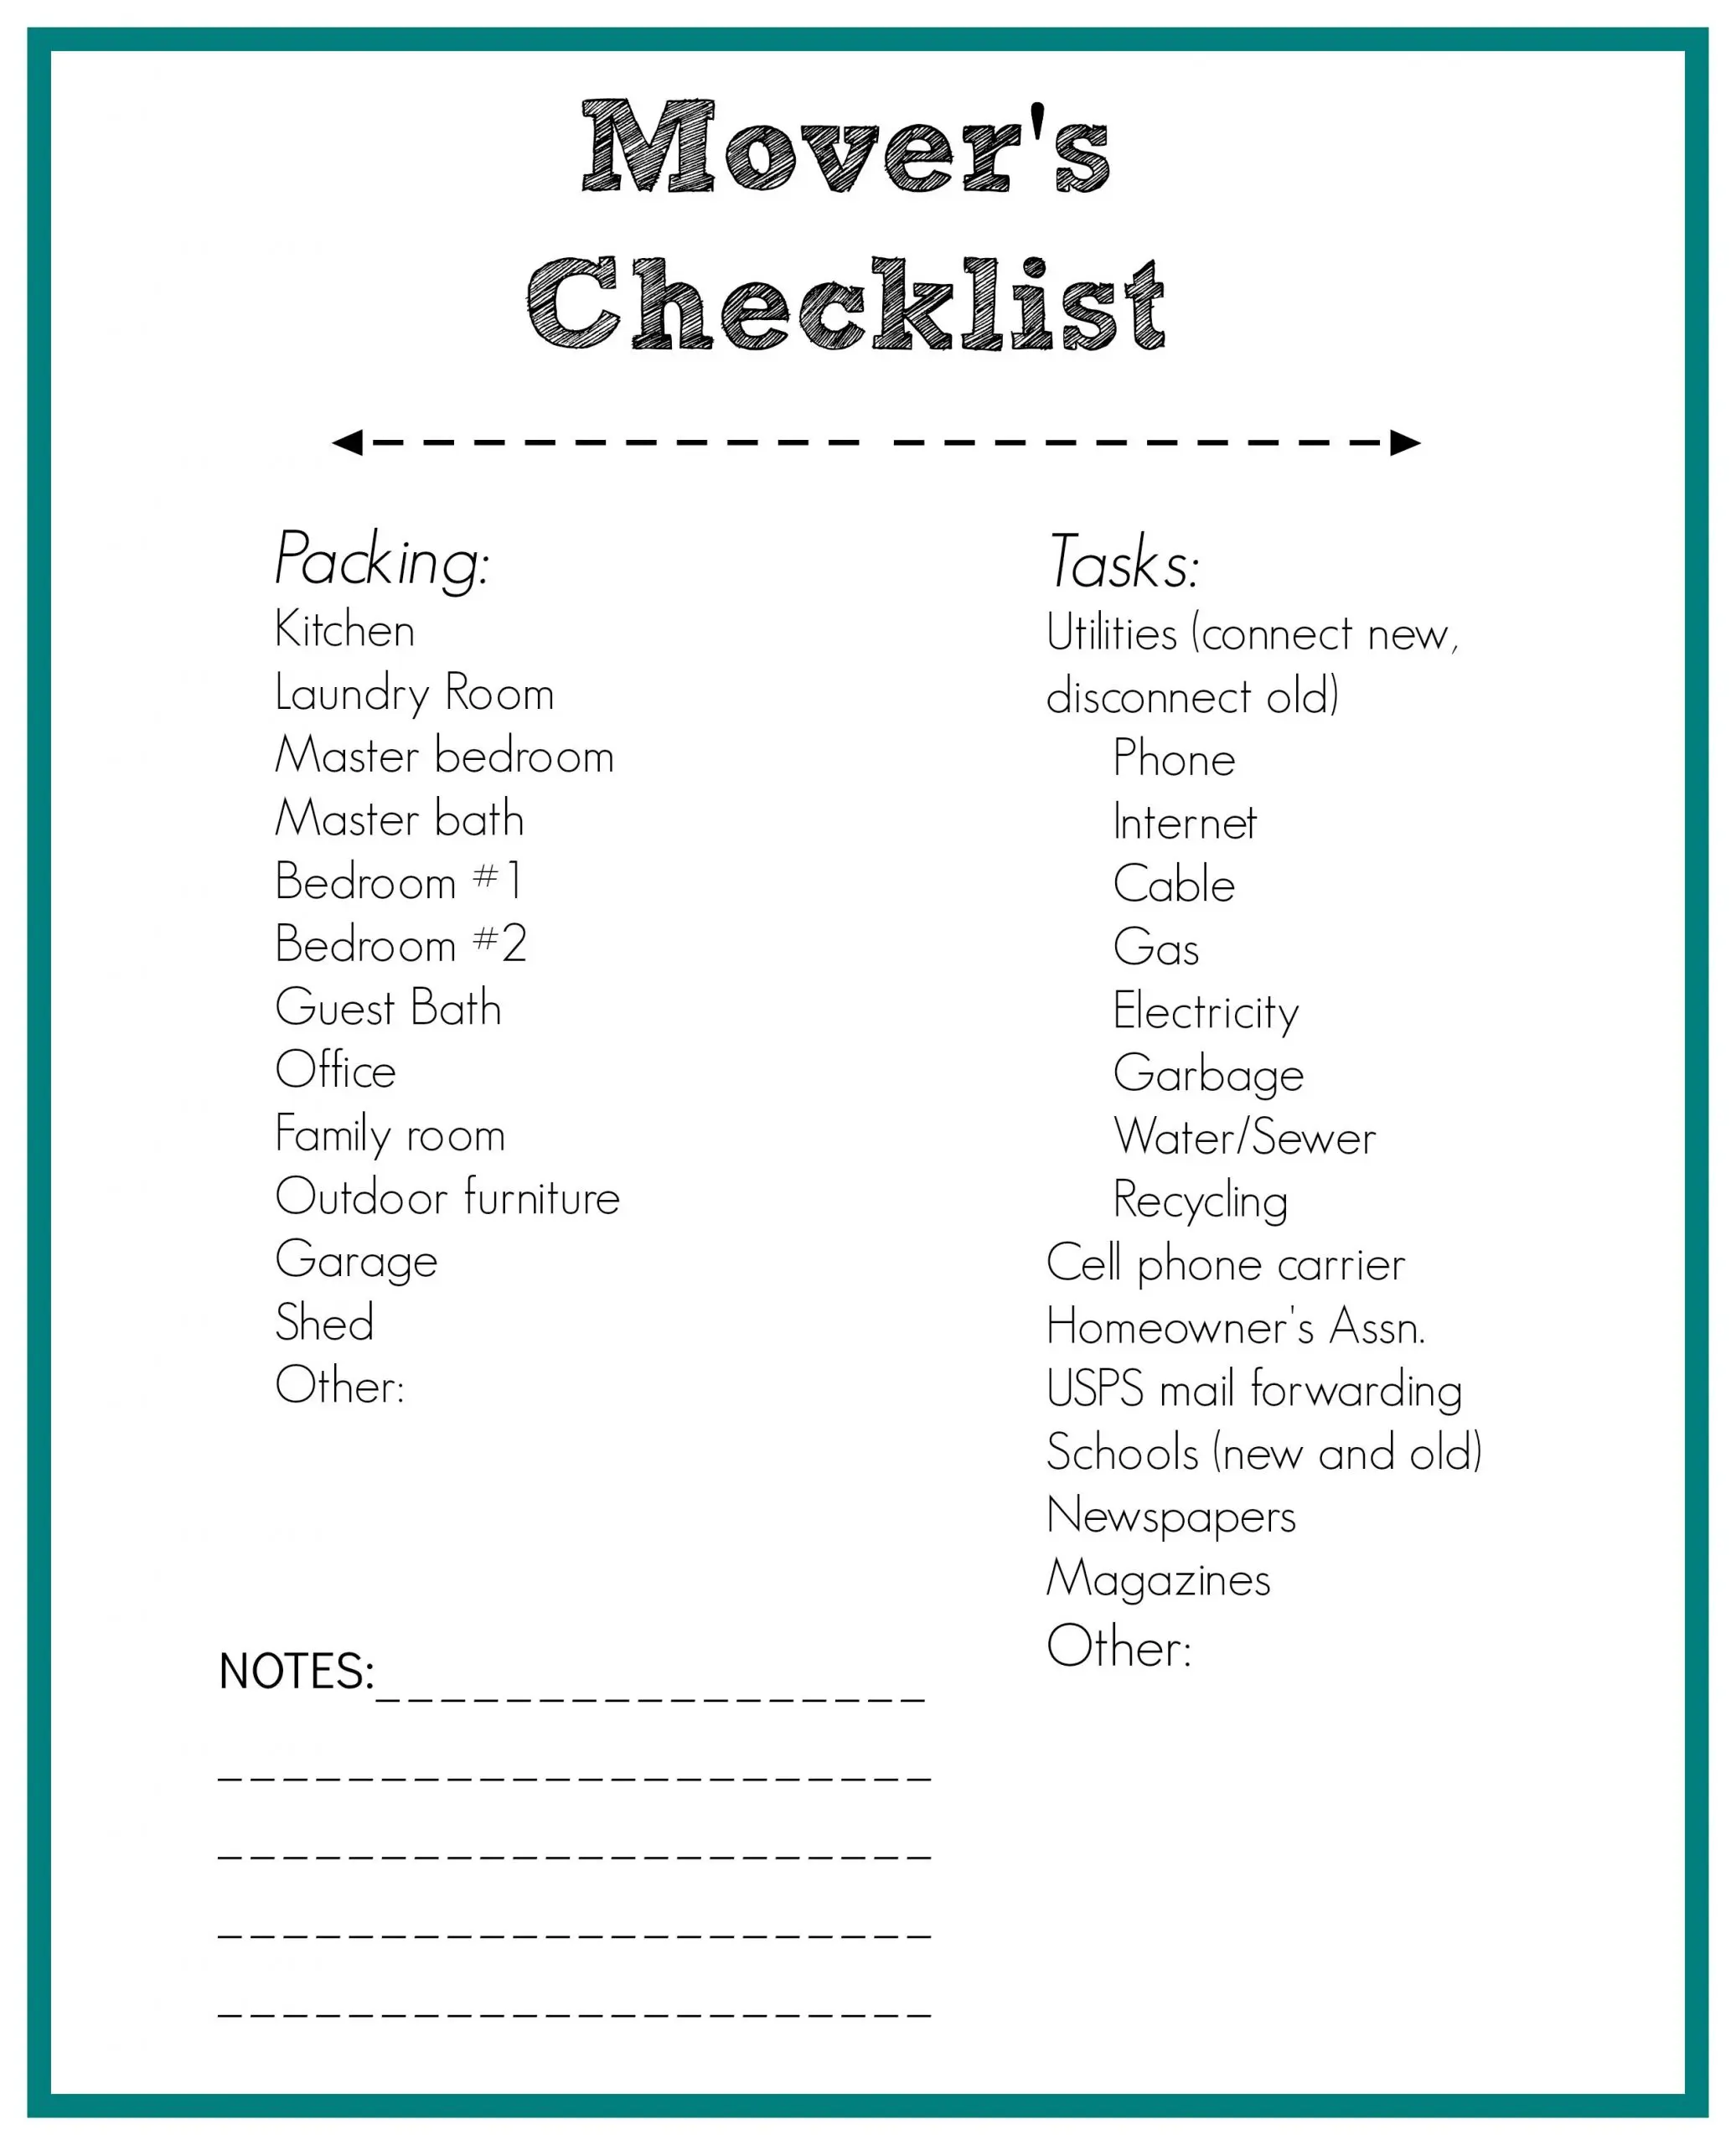 FARM: Your moving checklist